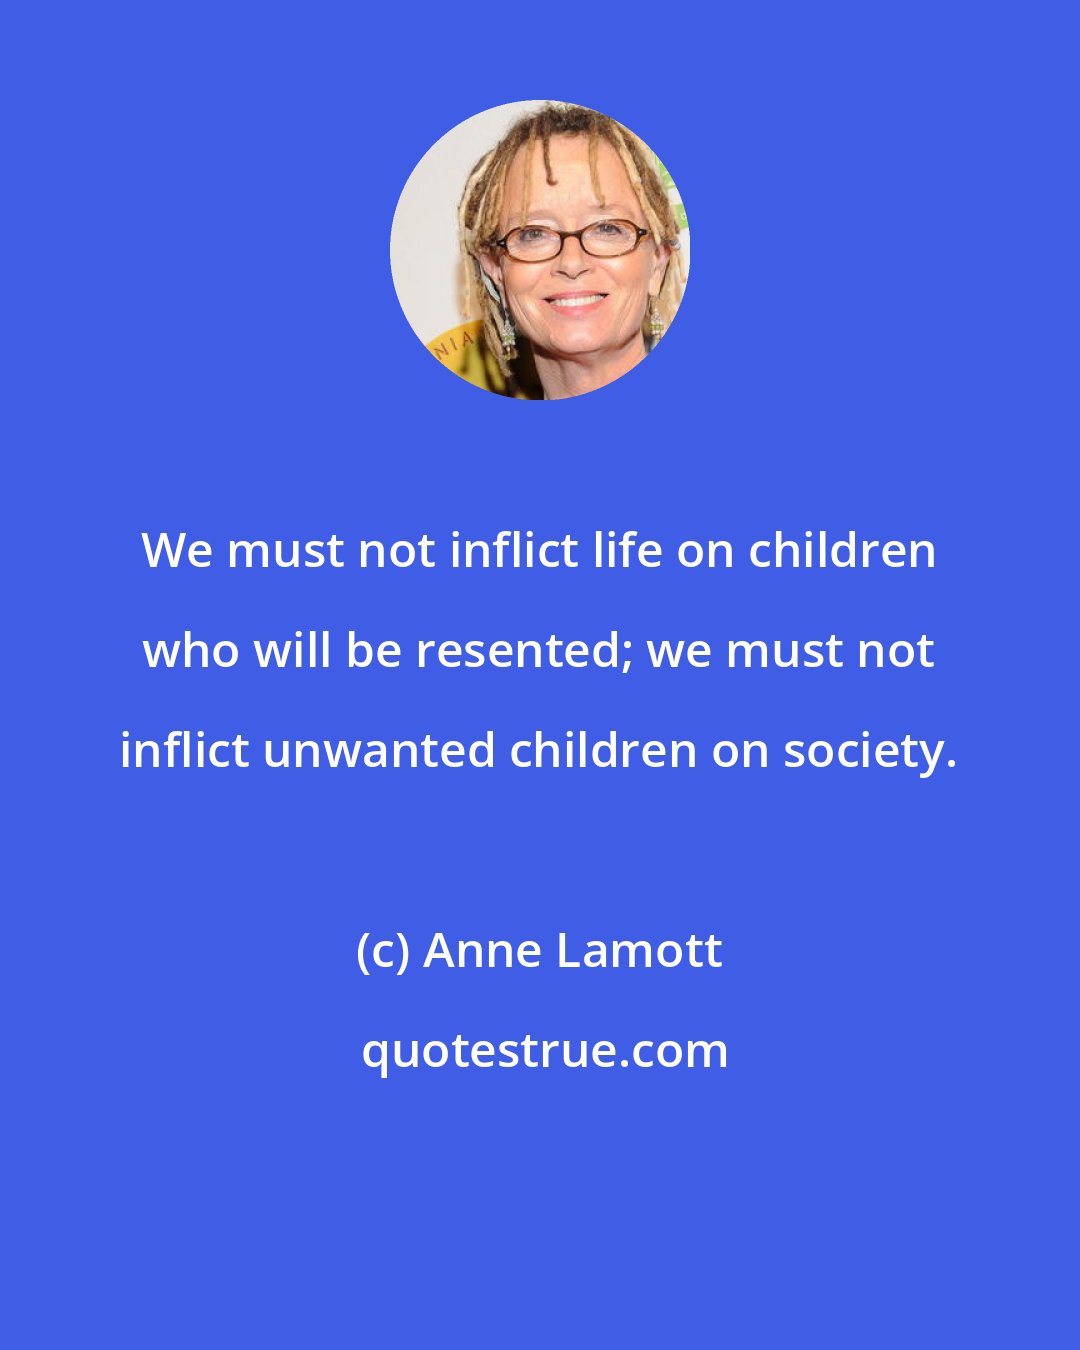 Anne Lamott: We must not inflict life on children who will be resented; we must not inflict unwanted children on society.